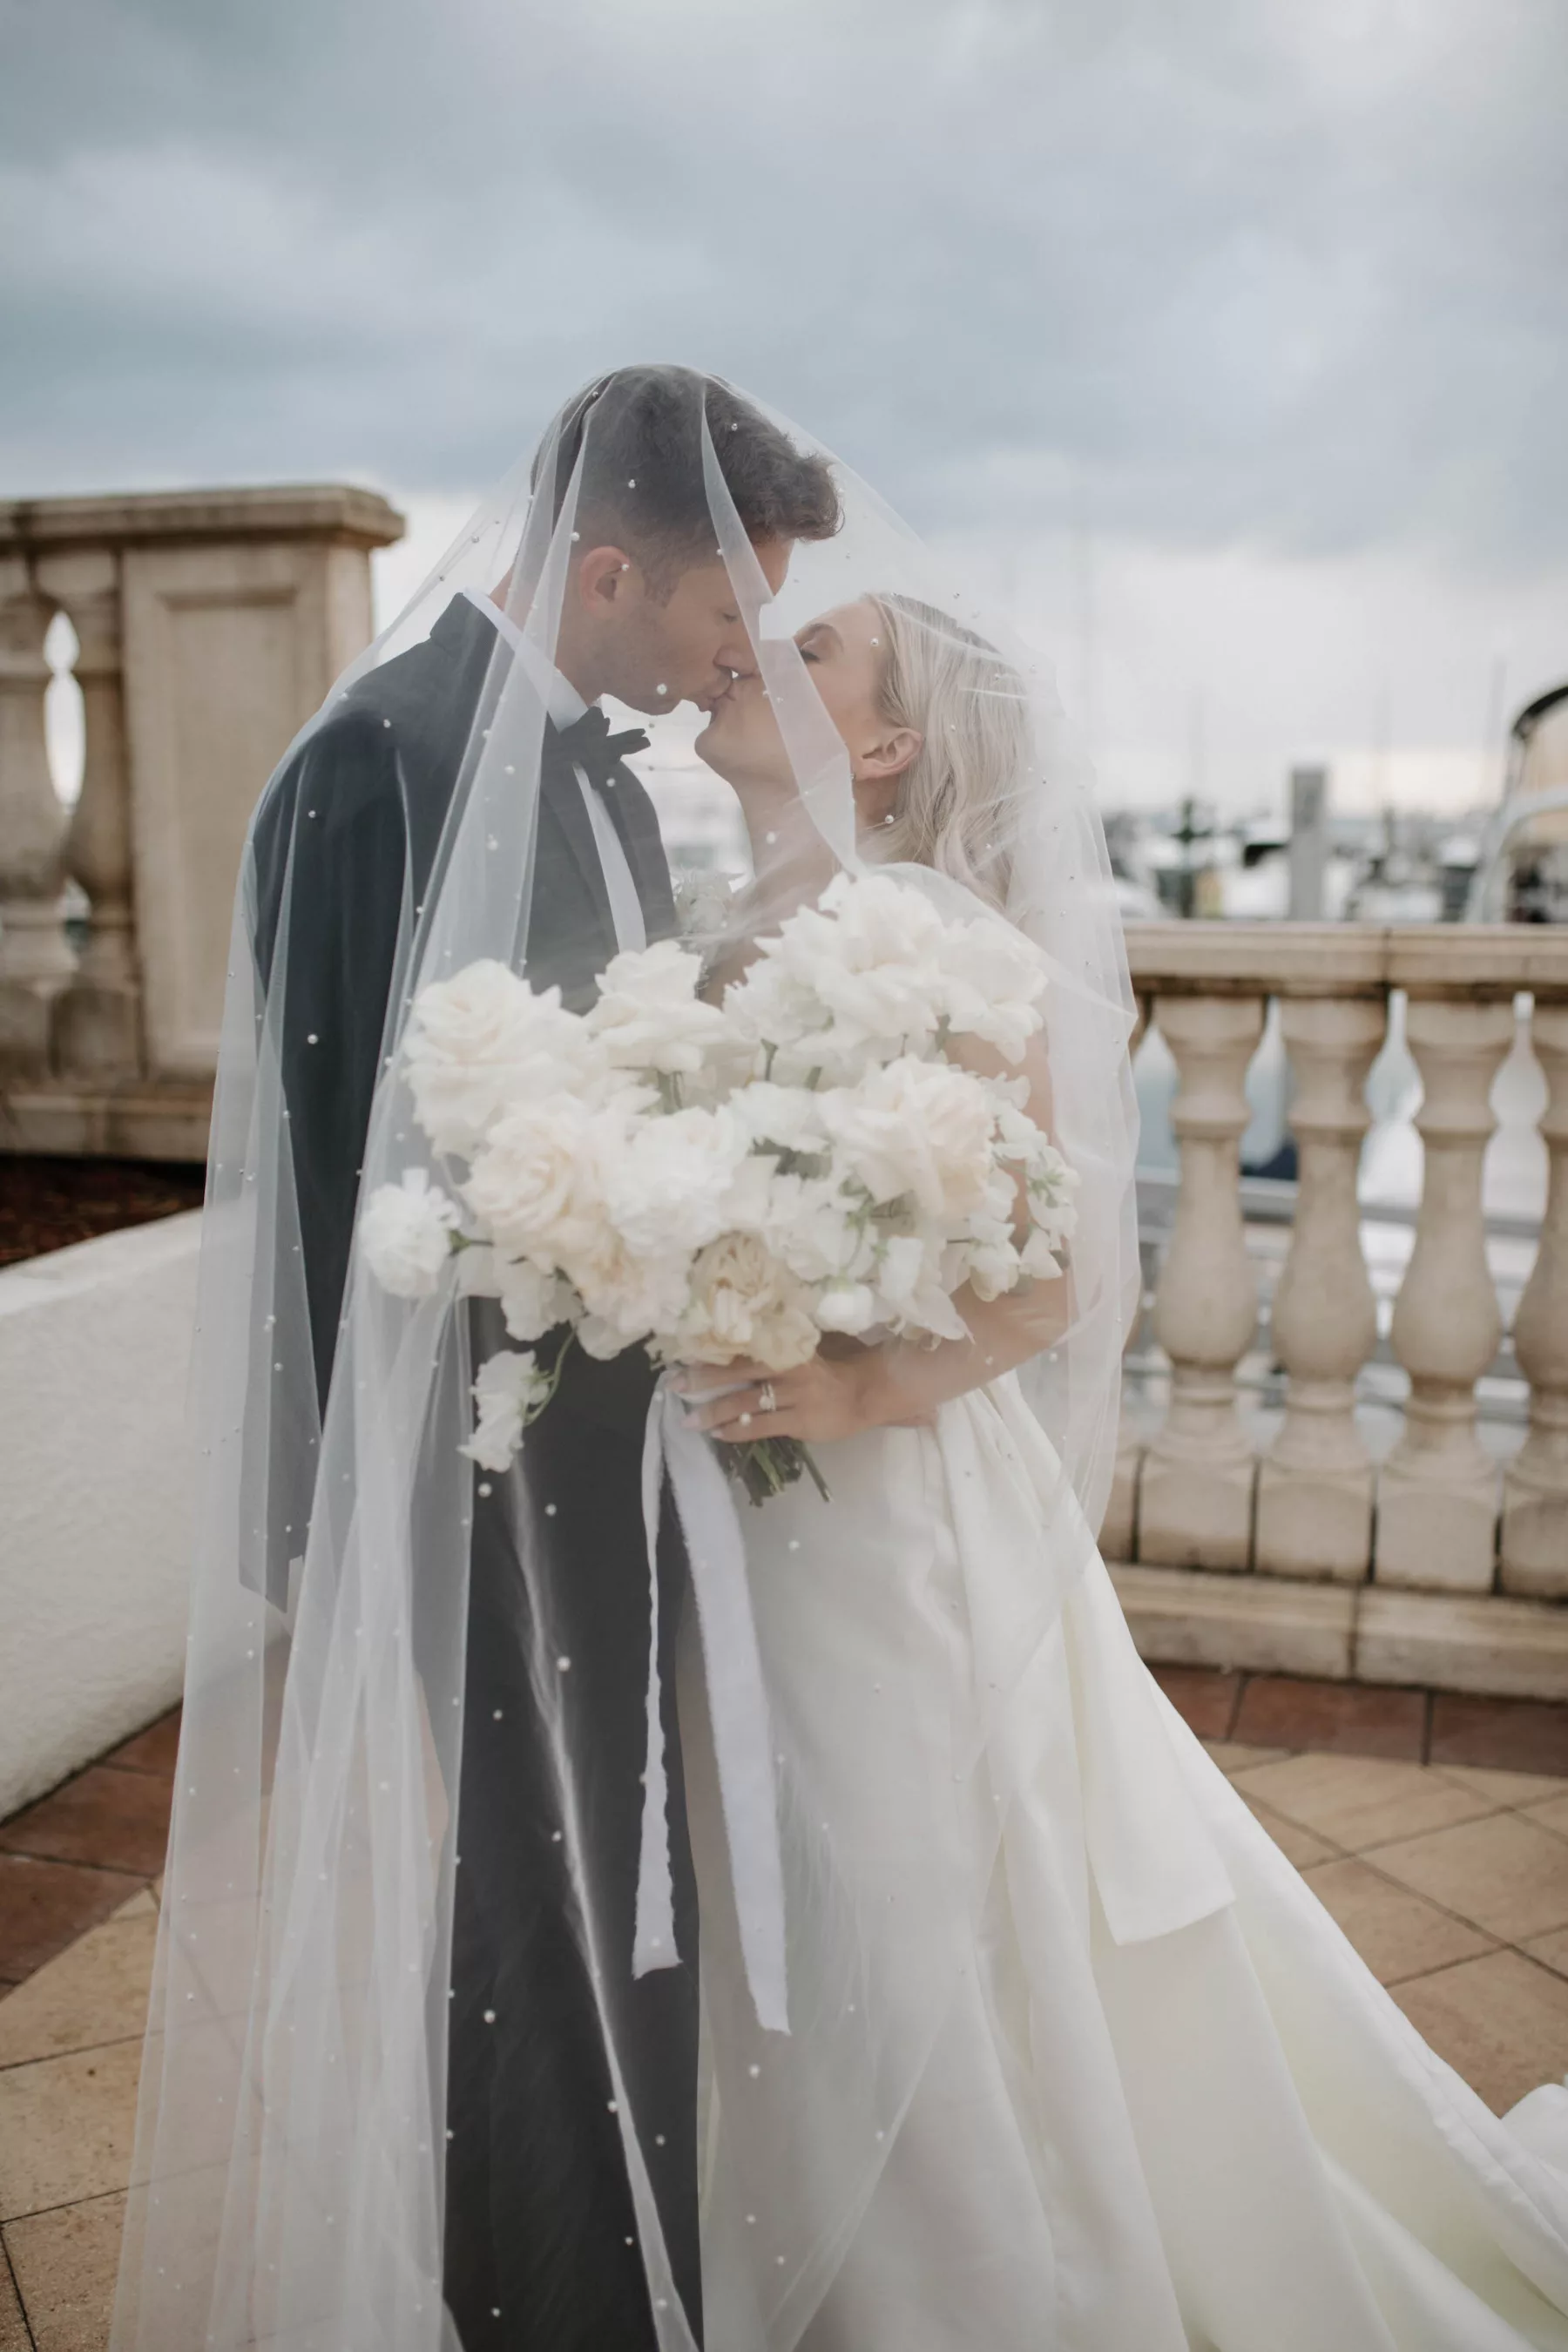 Romantic Bride and Groom Just Married Wedding Portrait | Tampa Bay Event Venue Westshore Yacht Club